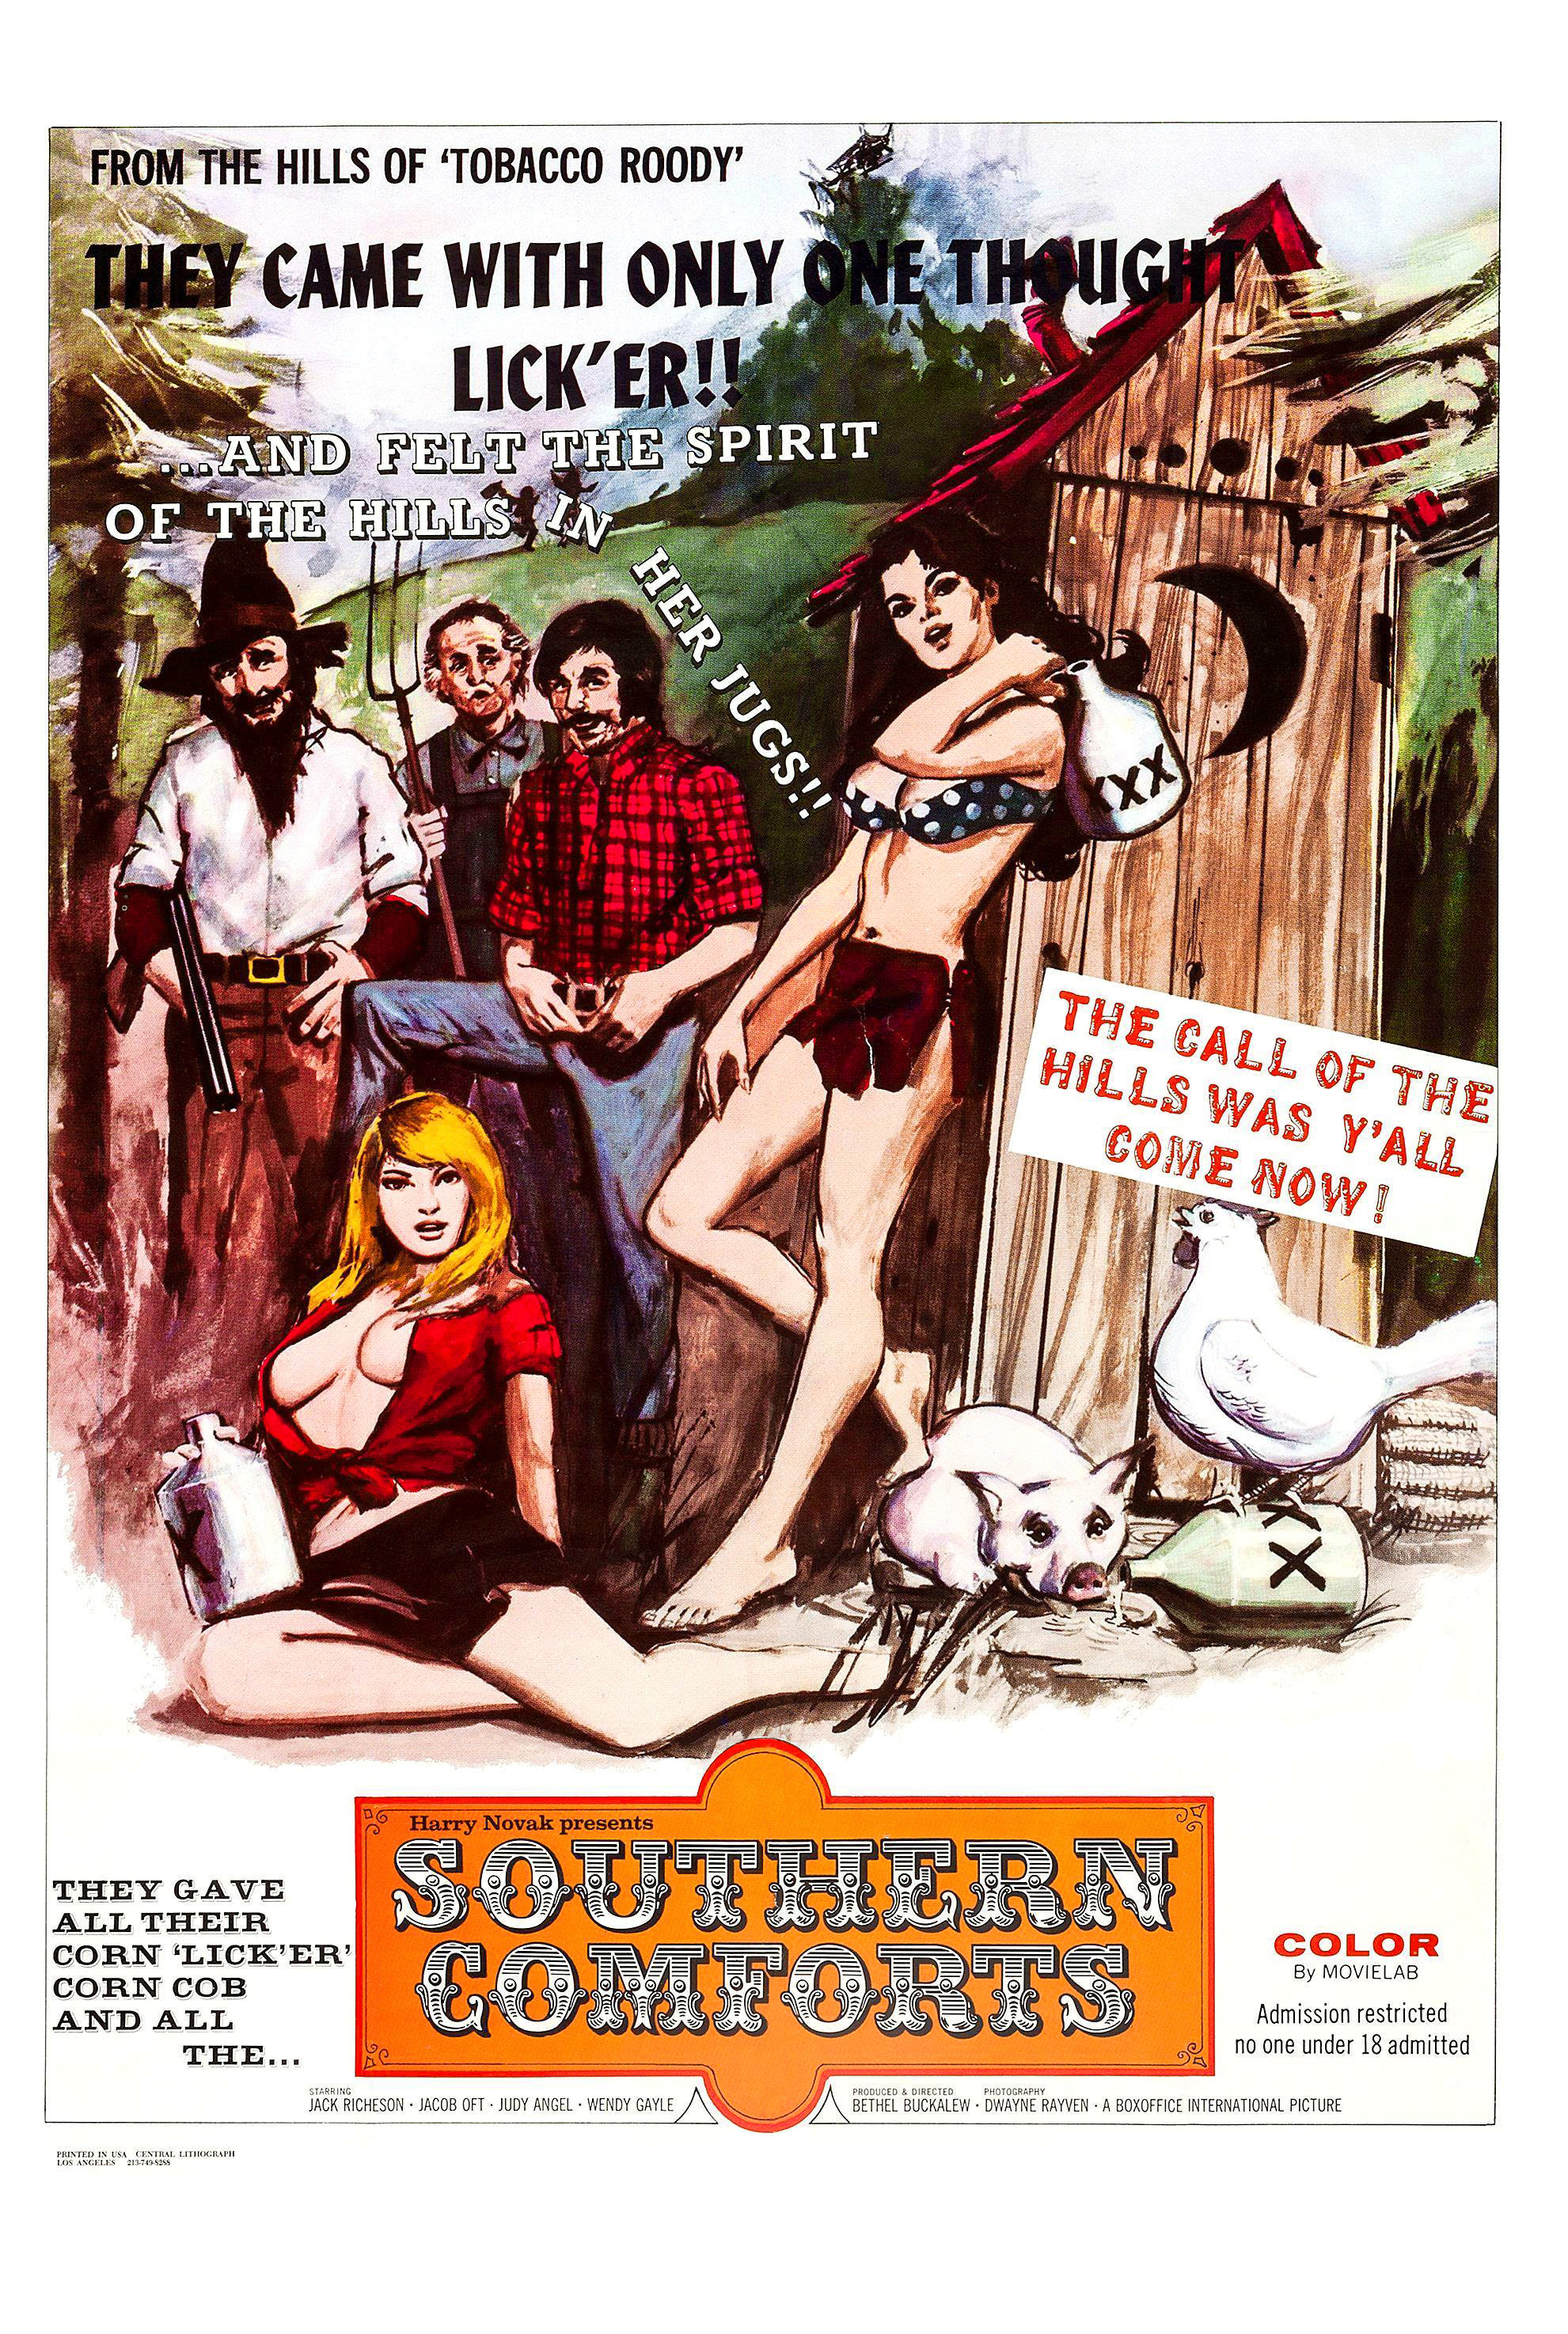 Southern Comforts (1971) Screenshot 2 